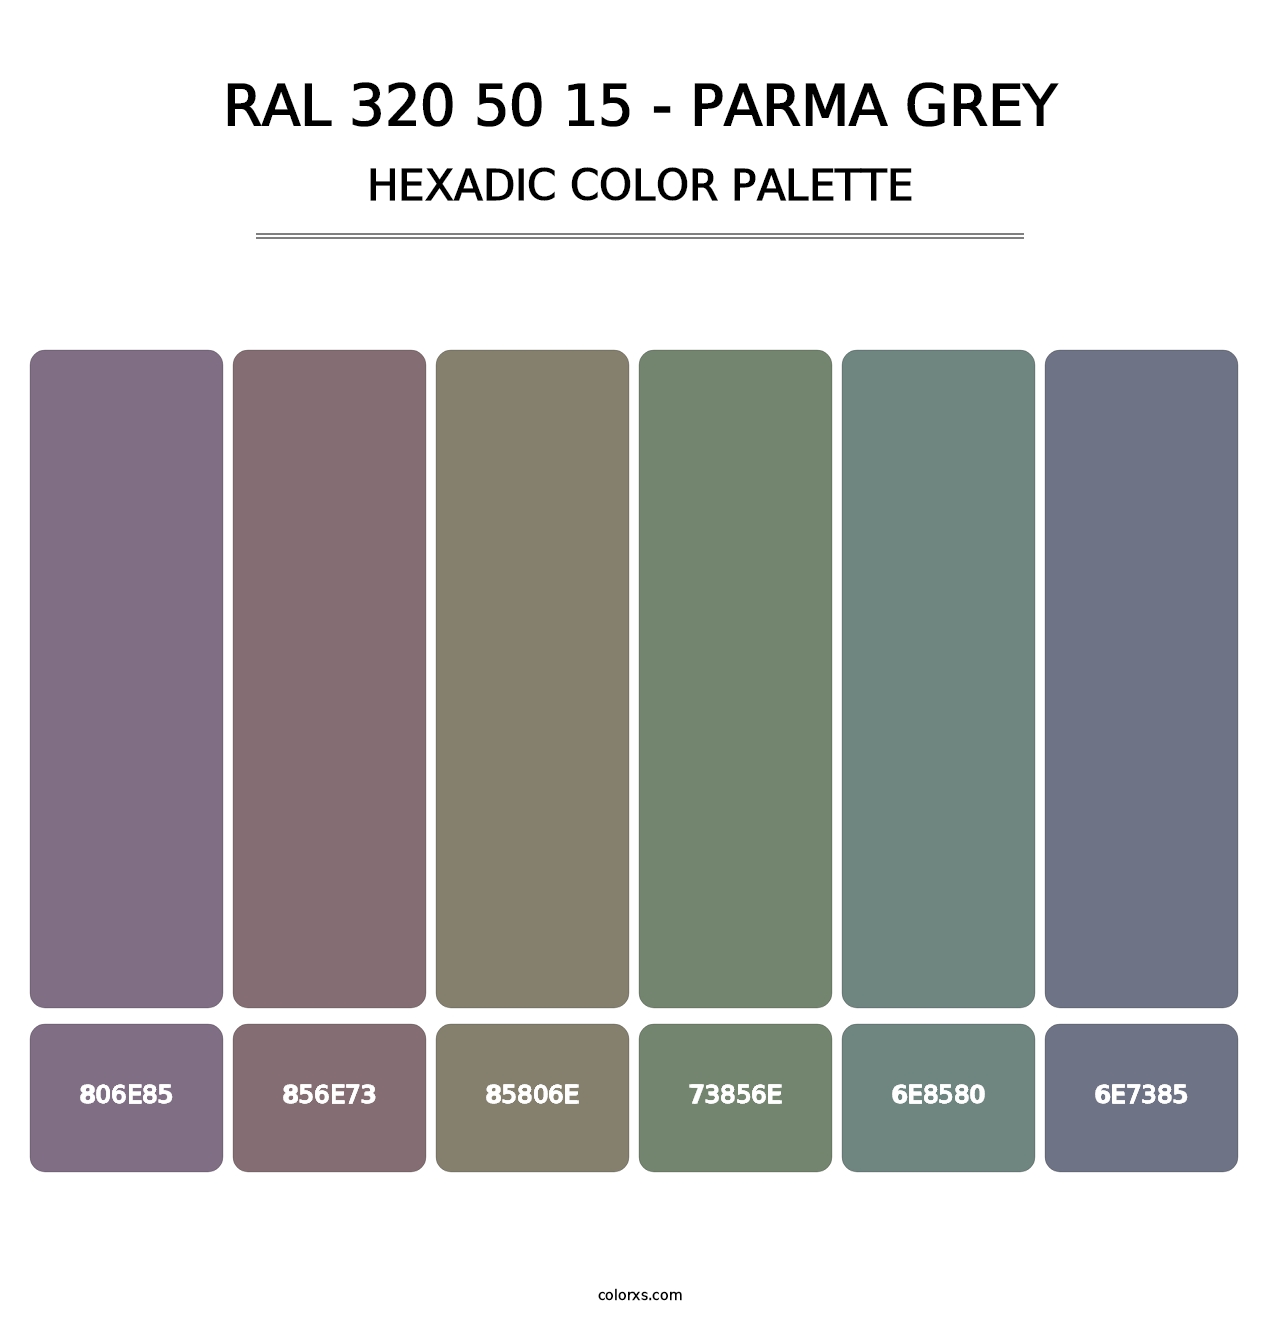 RAL 320 50 15 - Parma Grey - Hexadic Color Palette